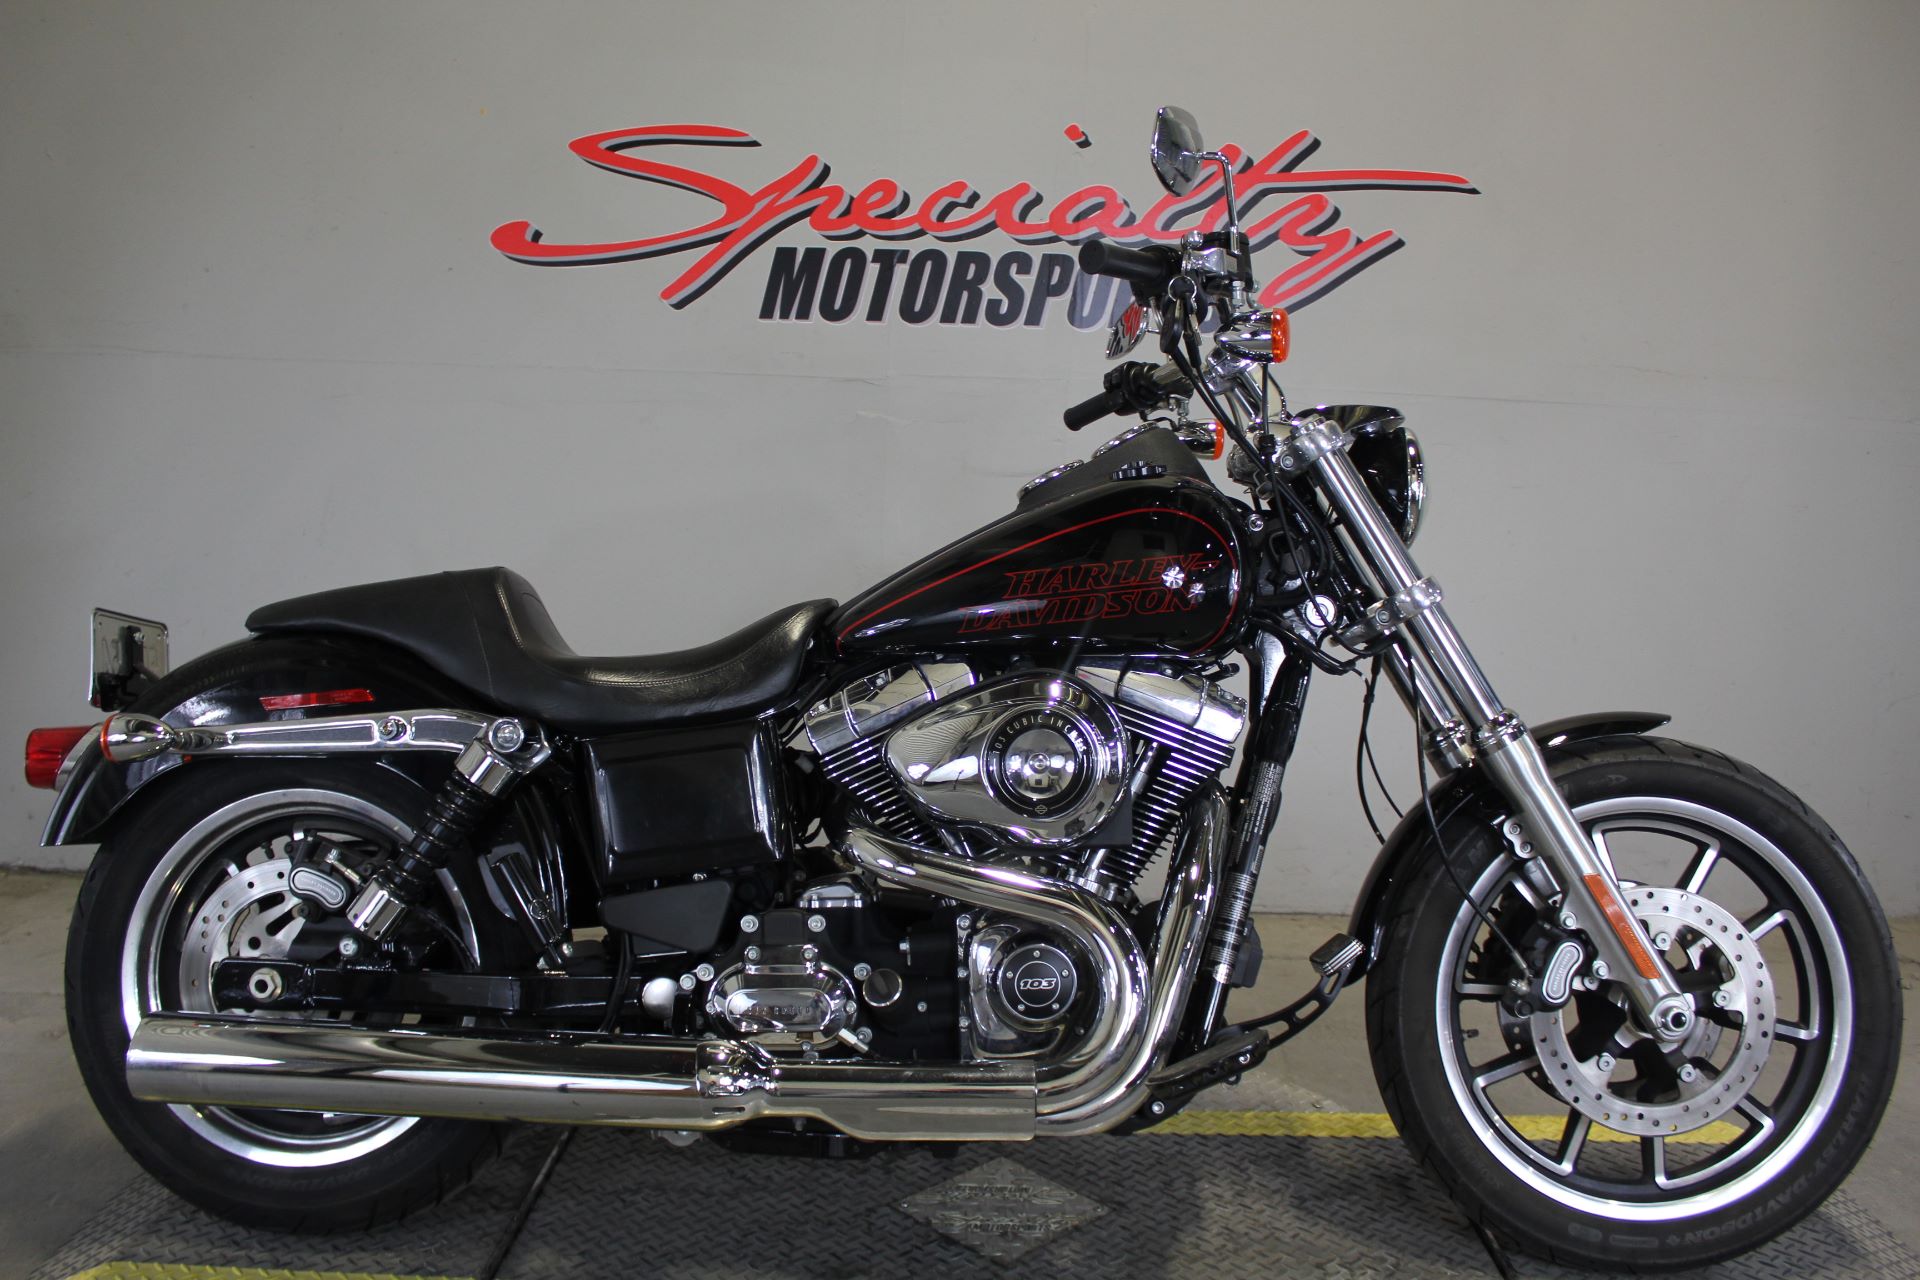 2014 Harley-Davidson Low Rider® in Sacramento, California - Photo 1